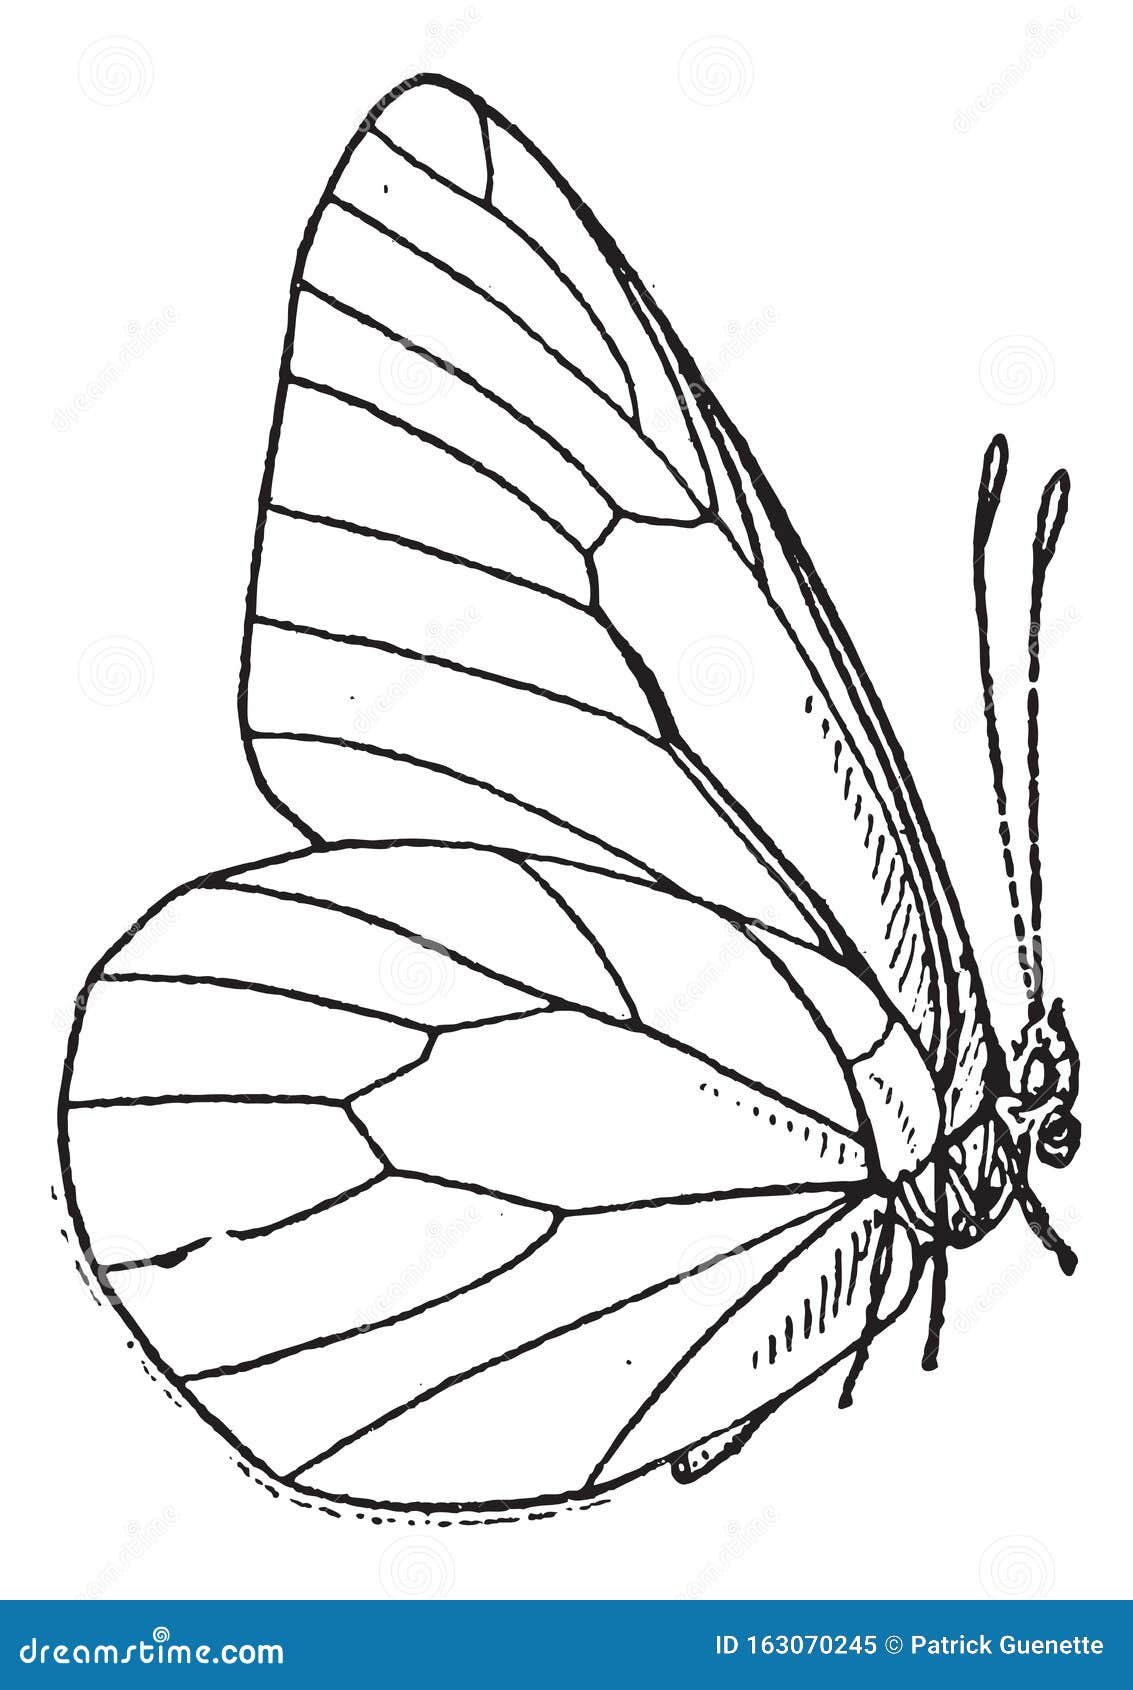 lepidopteran or lepidoptera, vintage engraving